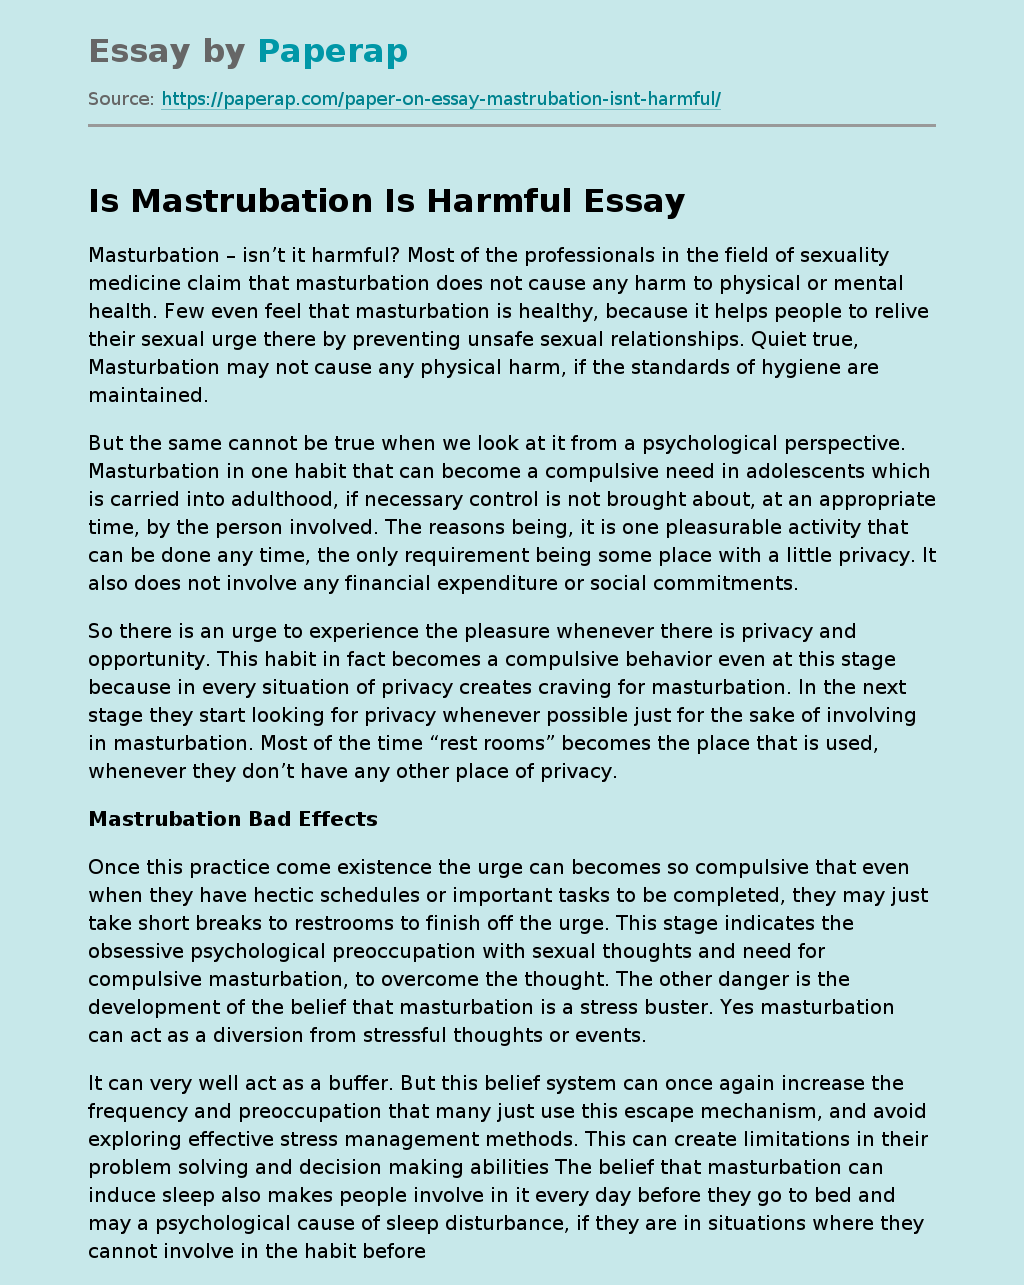 Is Mastrubation Is Harmful